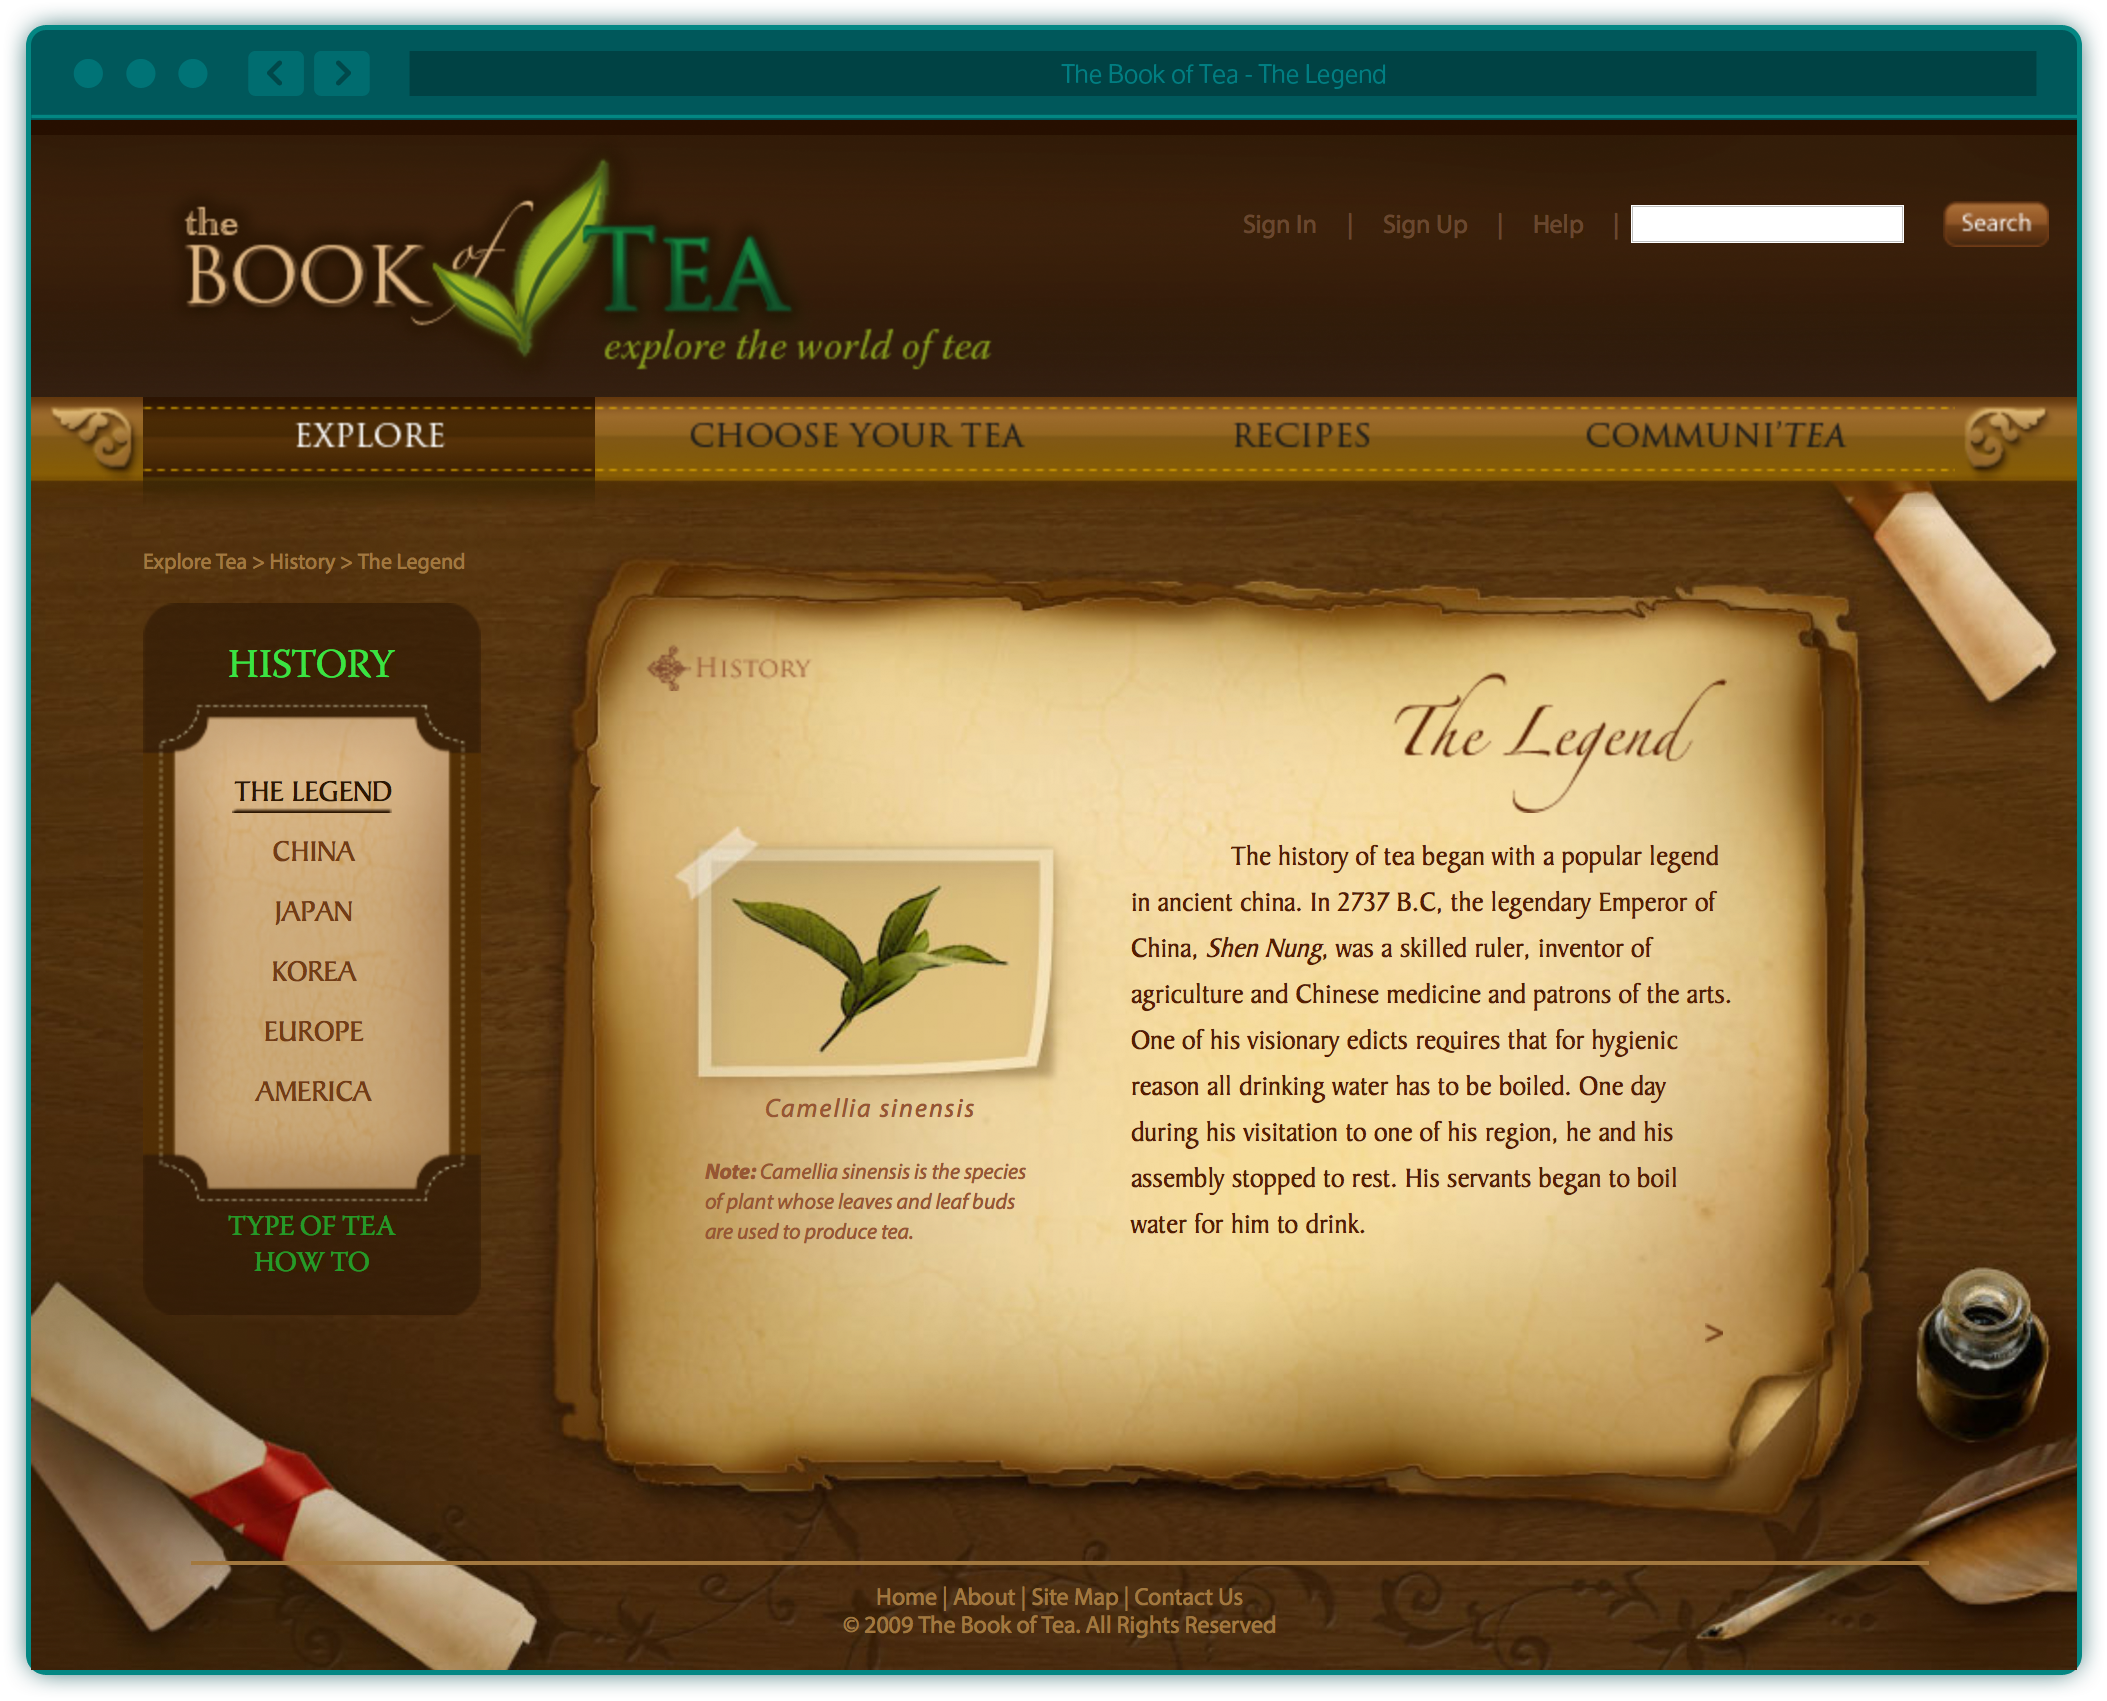 The Book of Tea website - the legend